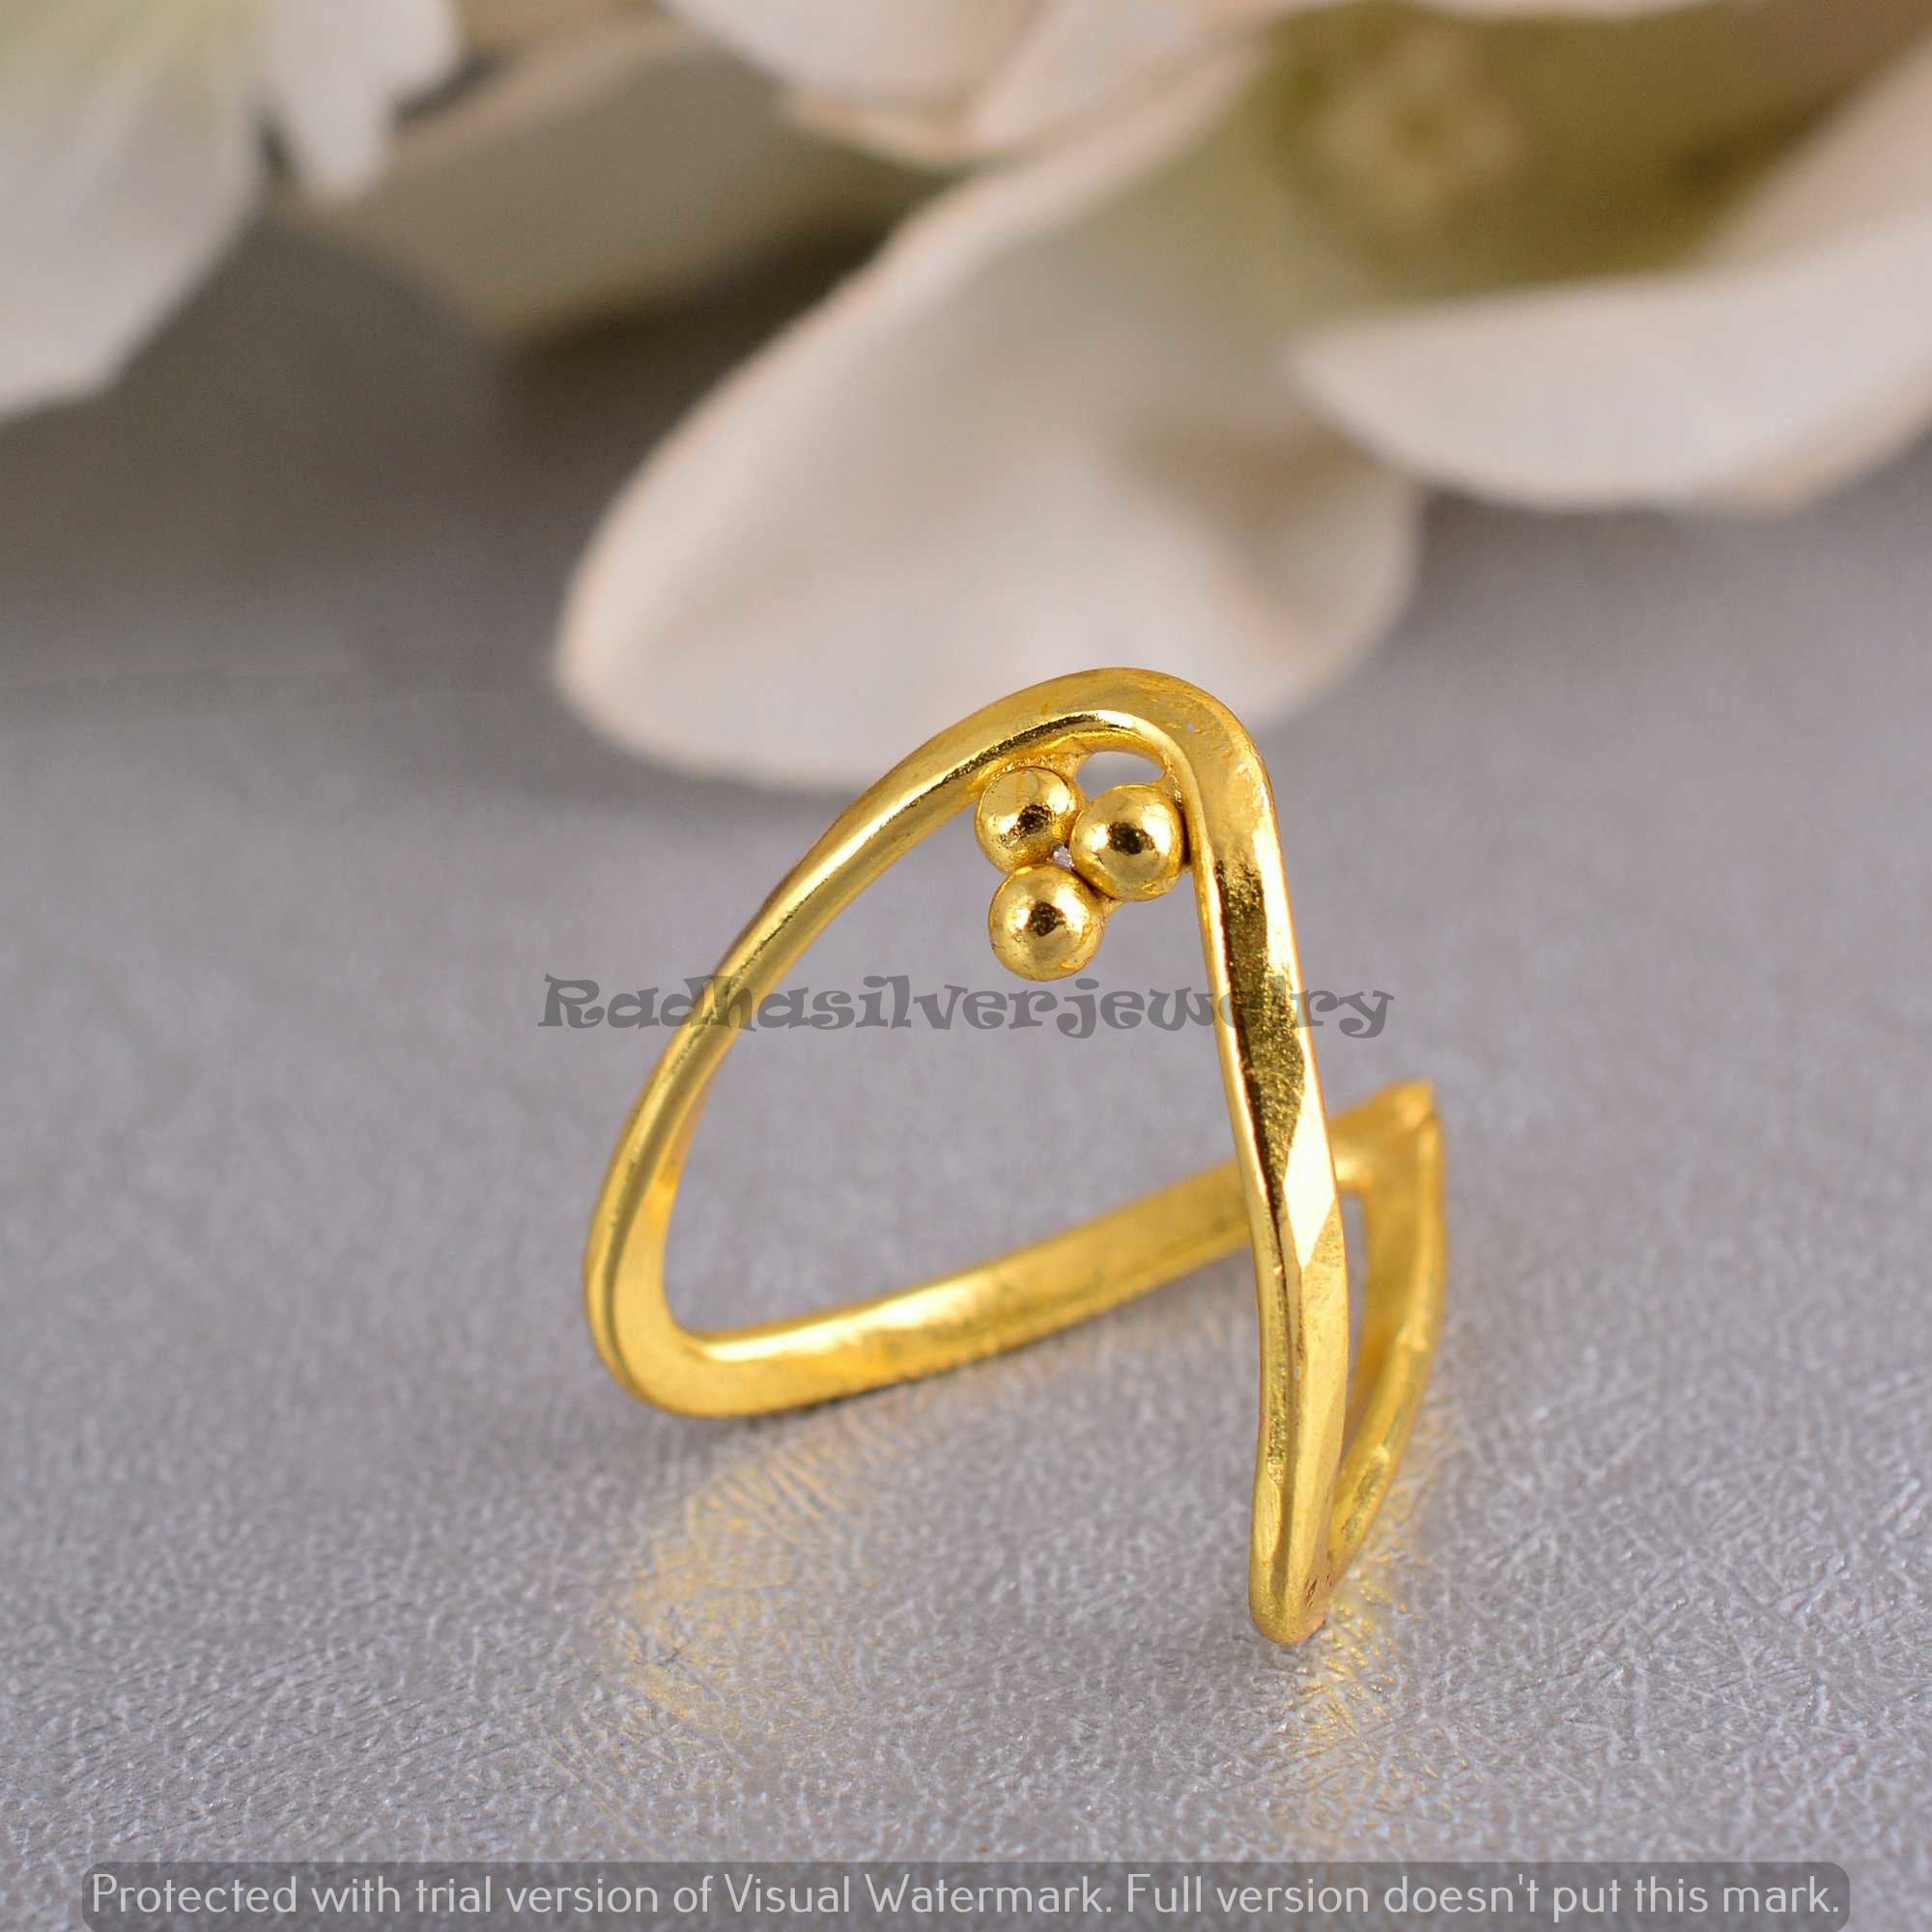 22K Gold Vanki Ring With Red Stones - 235-GVR386 in 4.050 Grams-demhanvico.com.vn